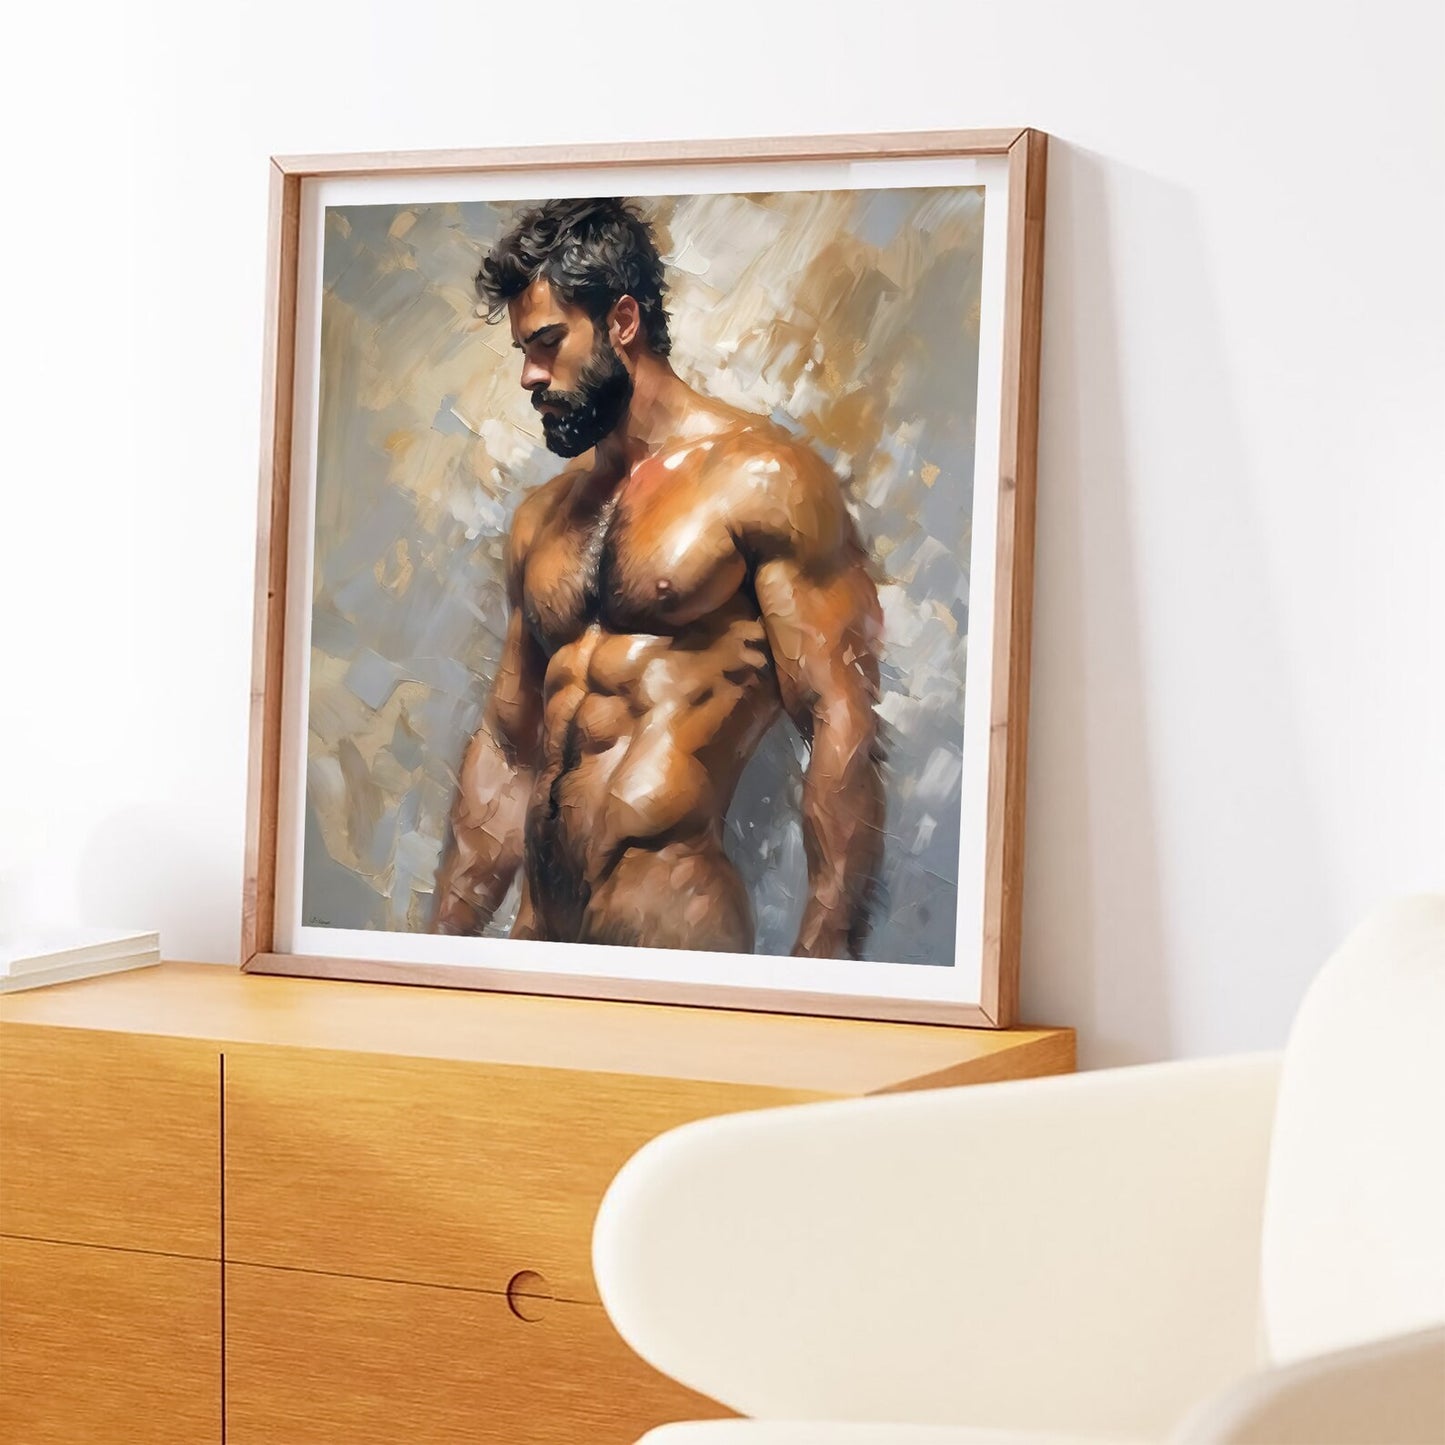 Nude Muscle Hairy Male Torso Portrait Download